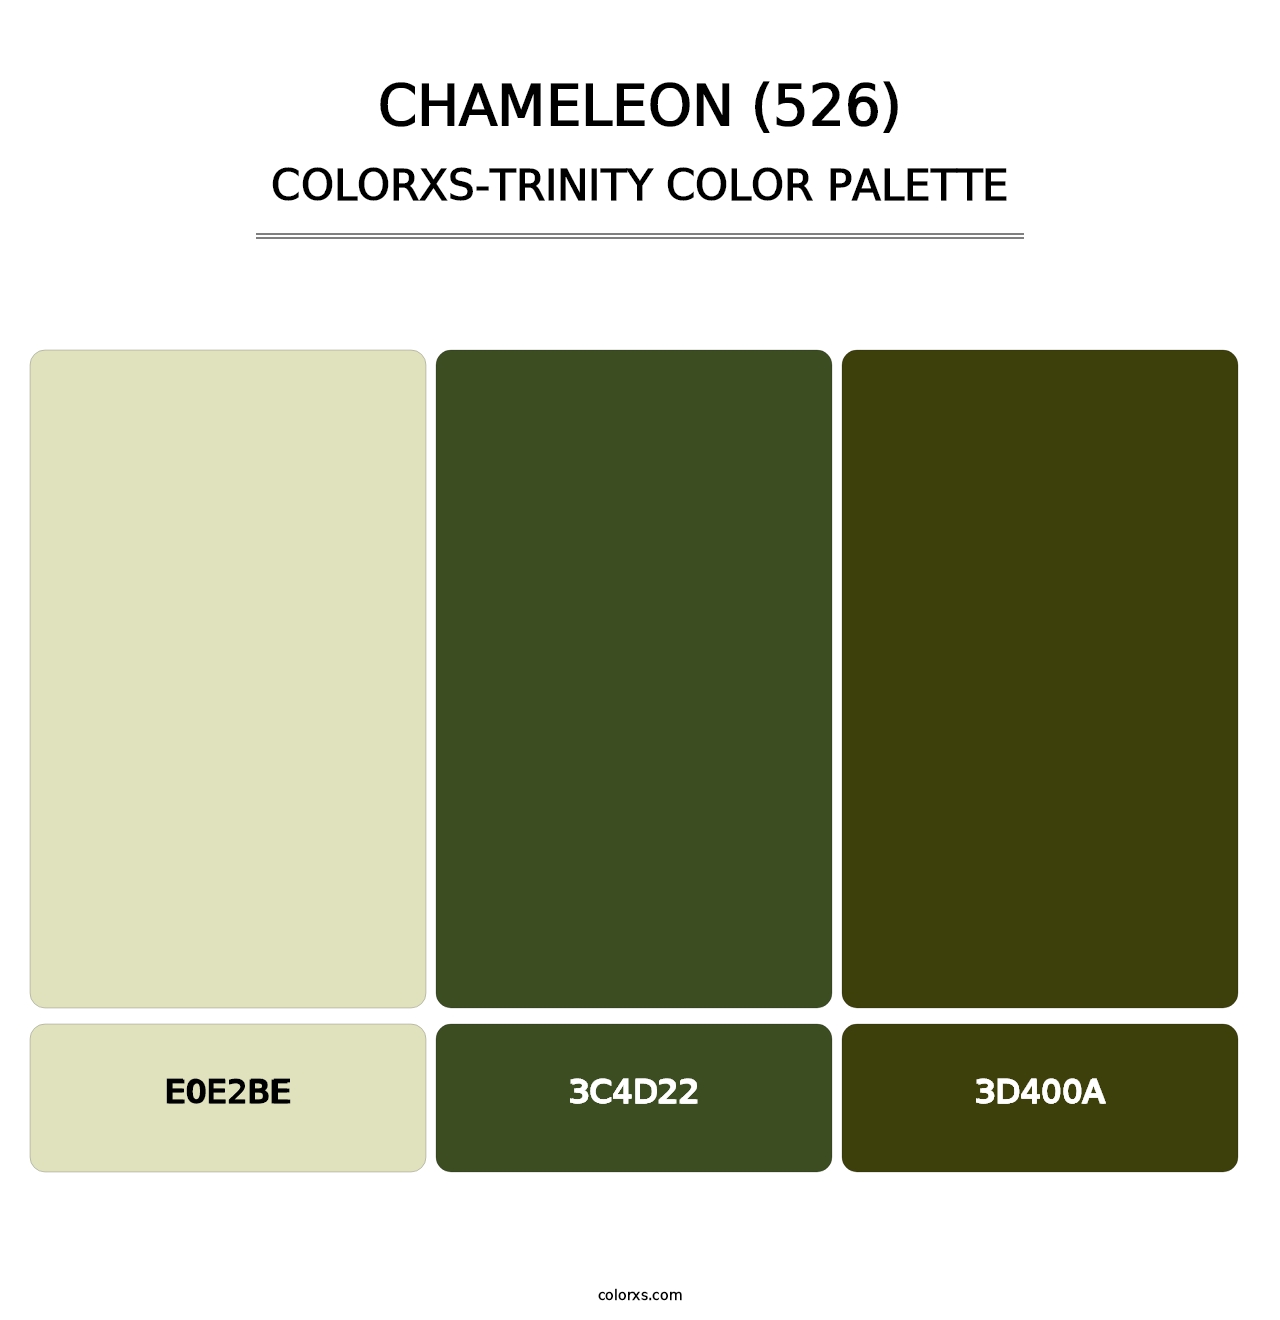 Chameleon (526) - Colorxs Trinity Palette